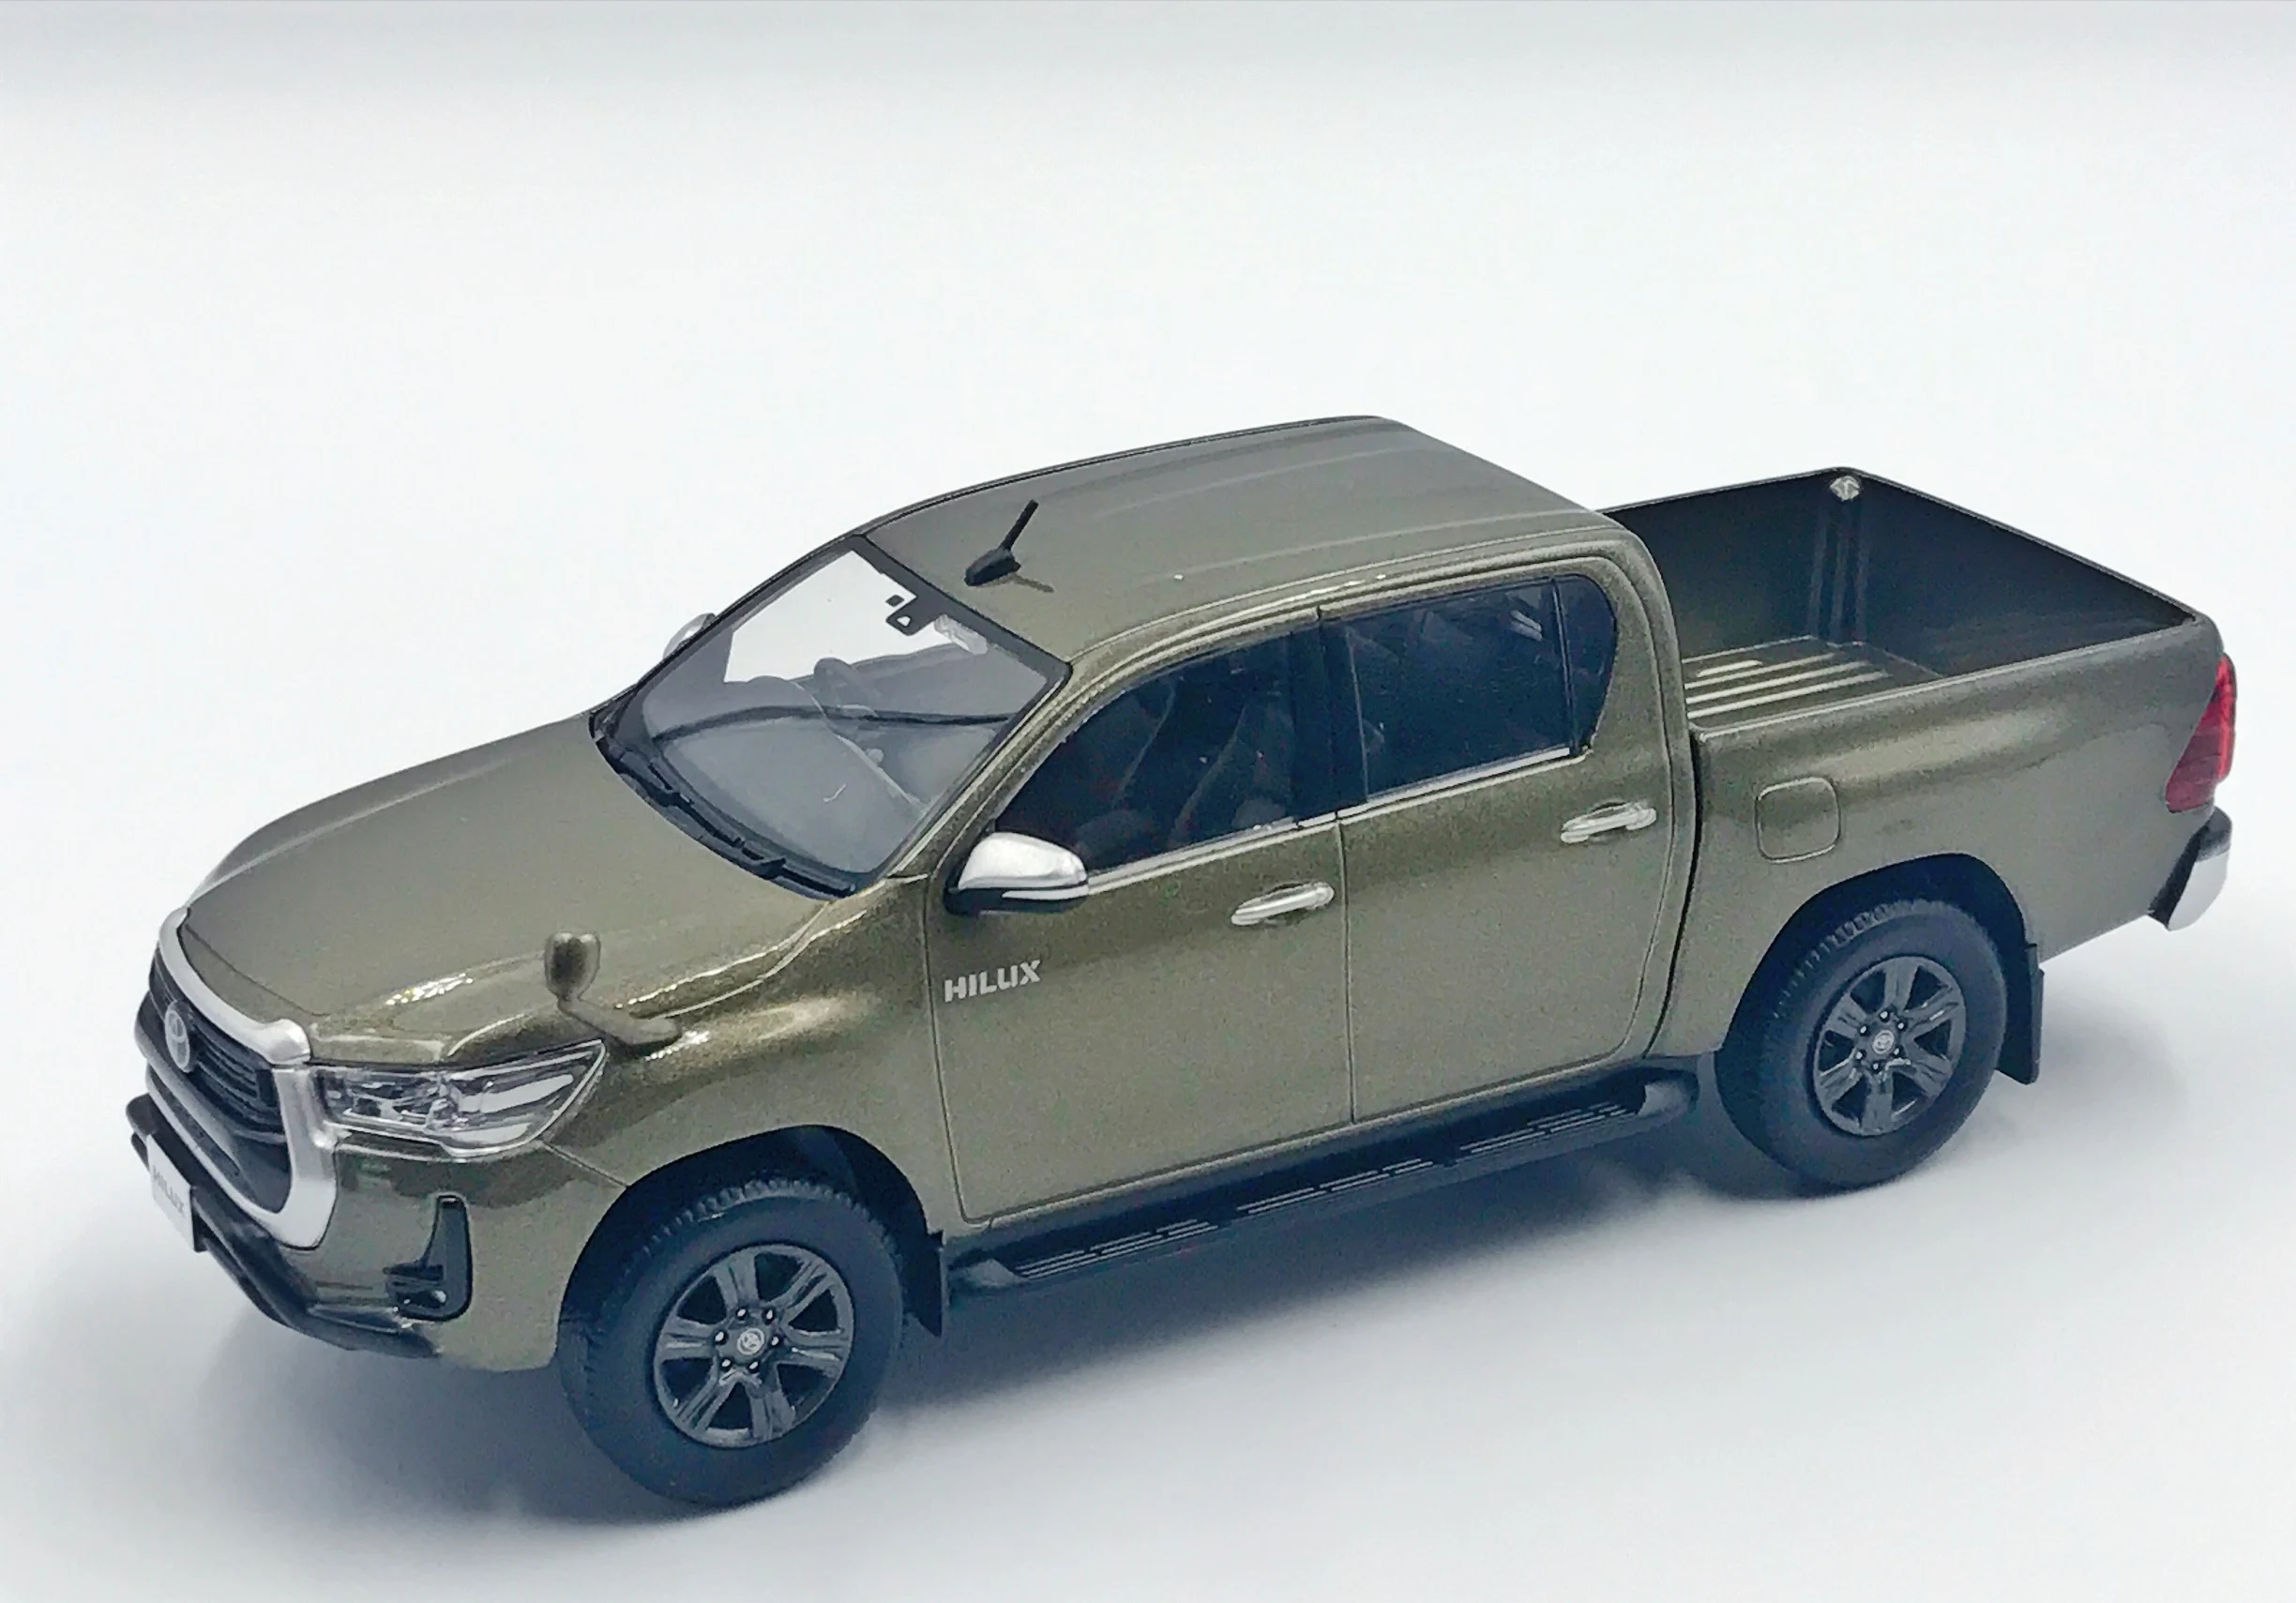 Original-Factory-1-30-Hilux-Pickup-Sports-Truck-Simulation-Limited-Edition-Alloy-Metal-Static-Car-Model.webp